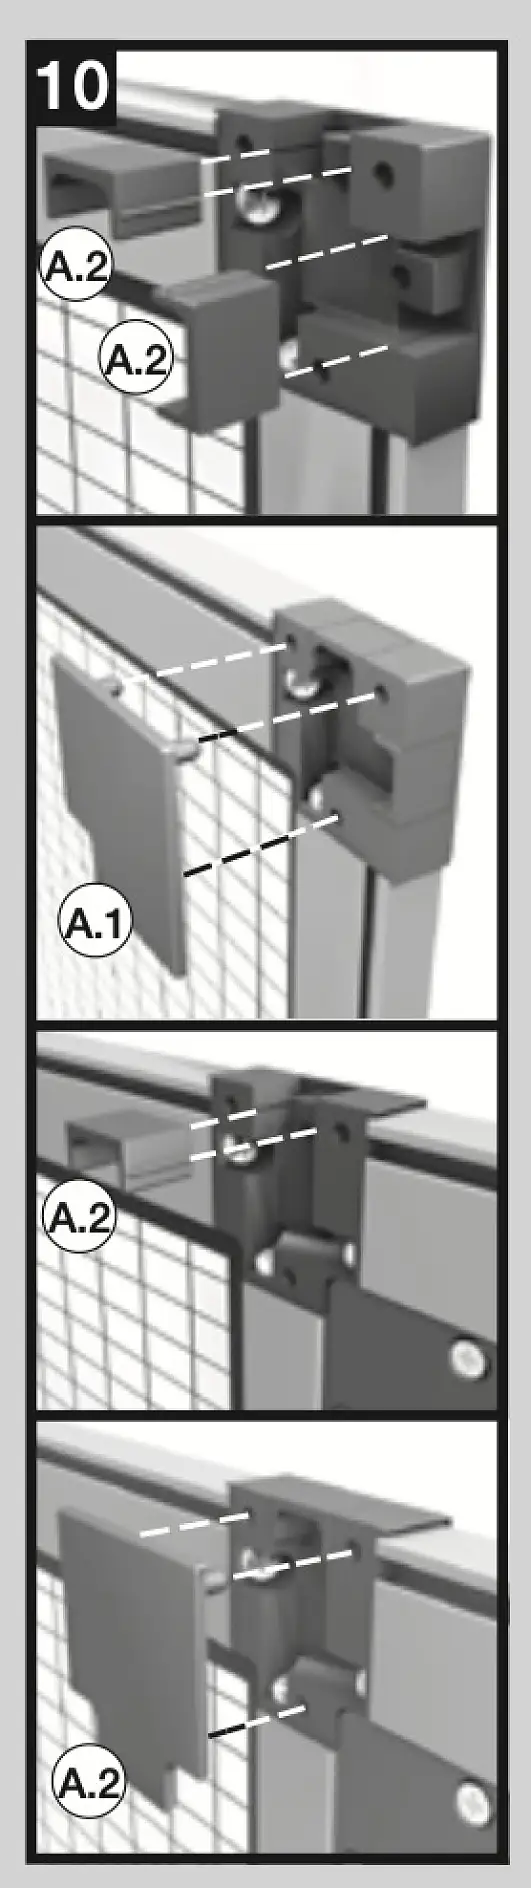 ALU Comfort Türen und Adapter Montageanleitung Schritt 10